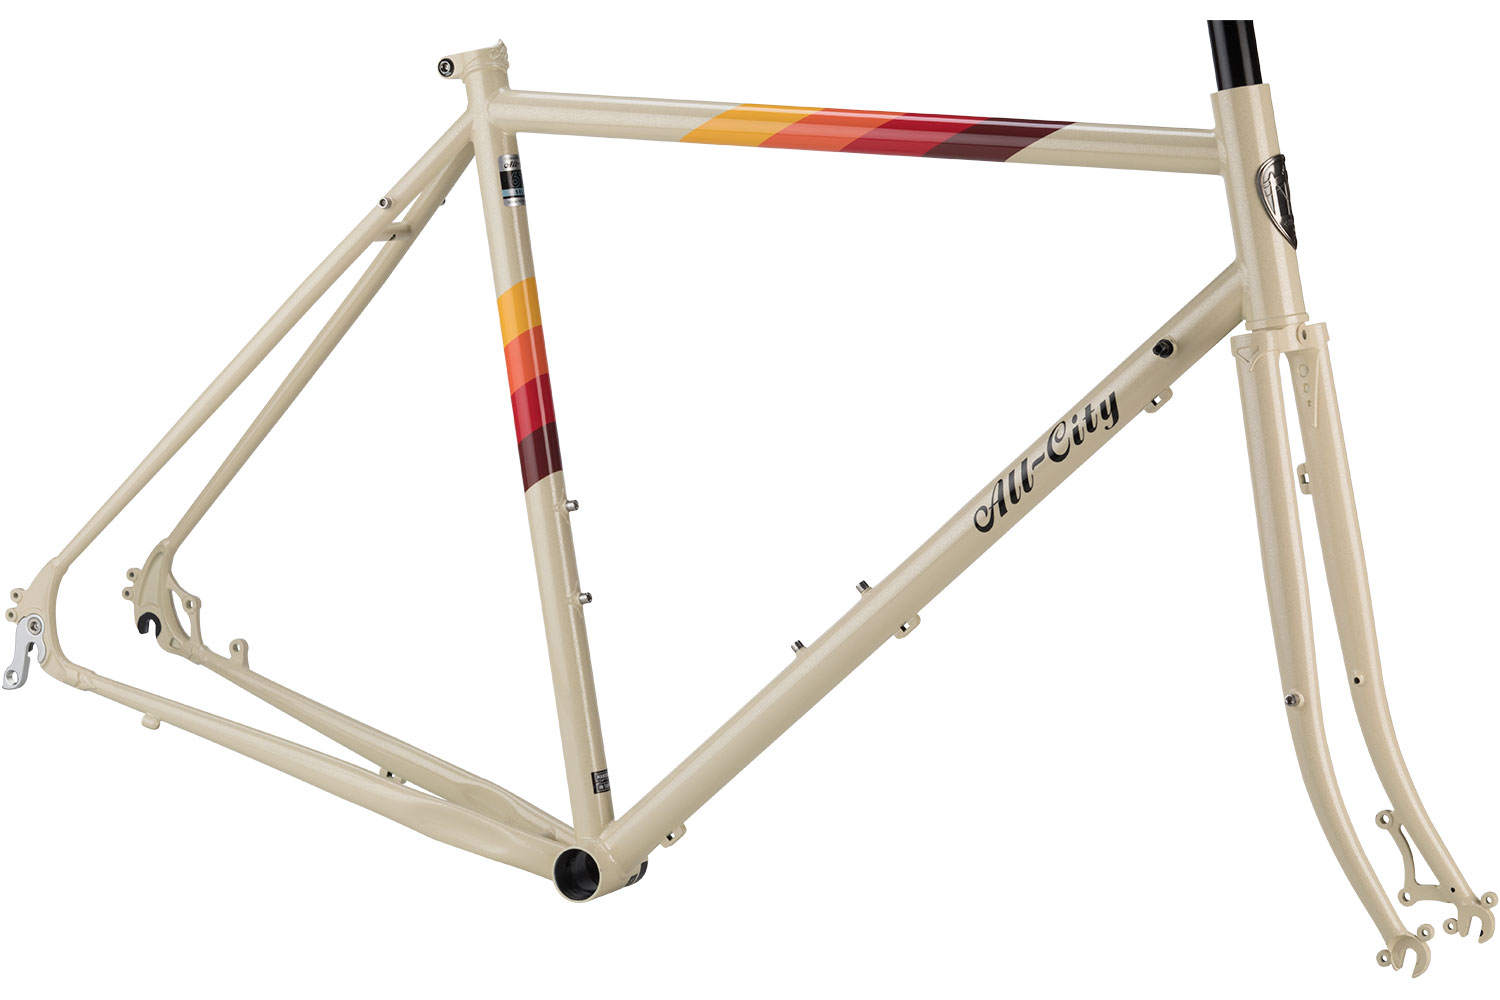 54cm bike frame height